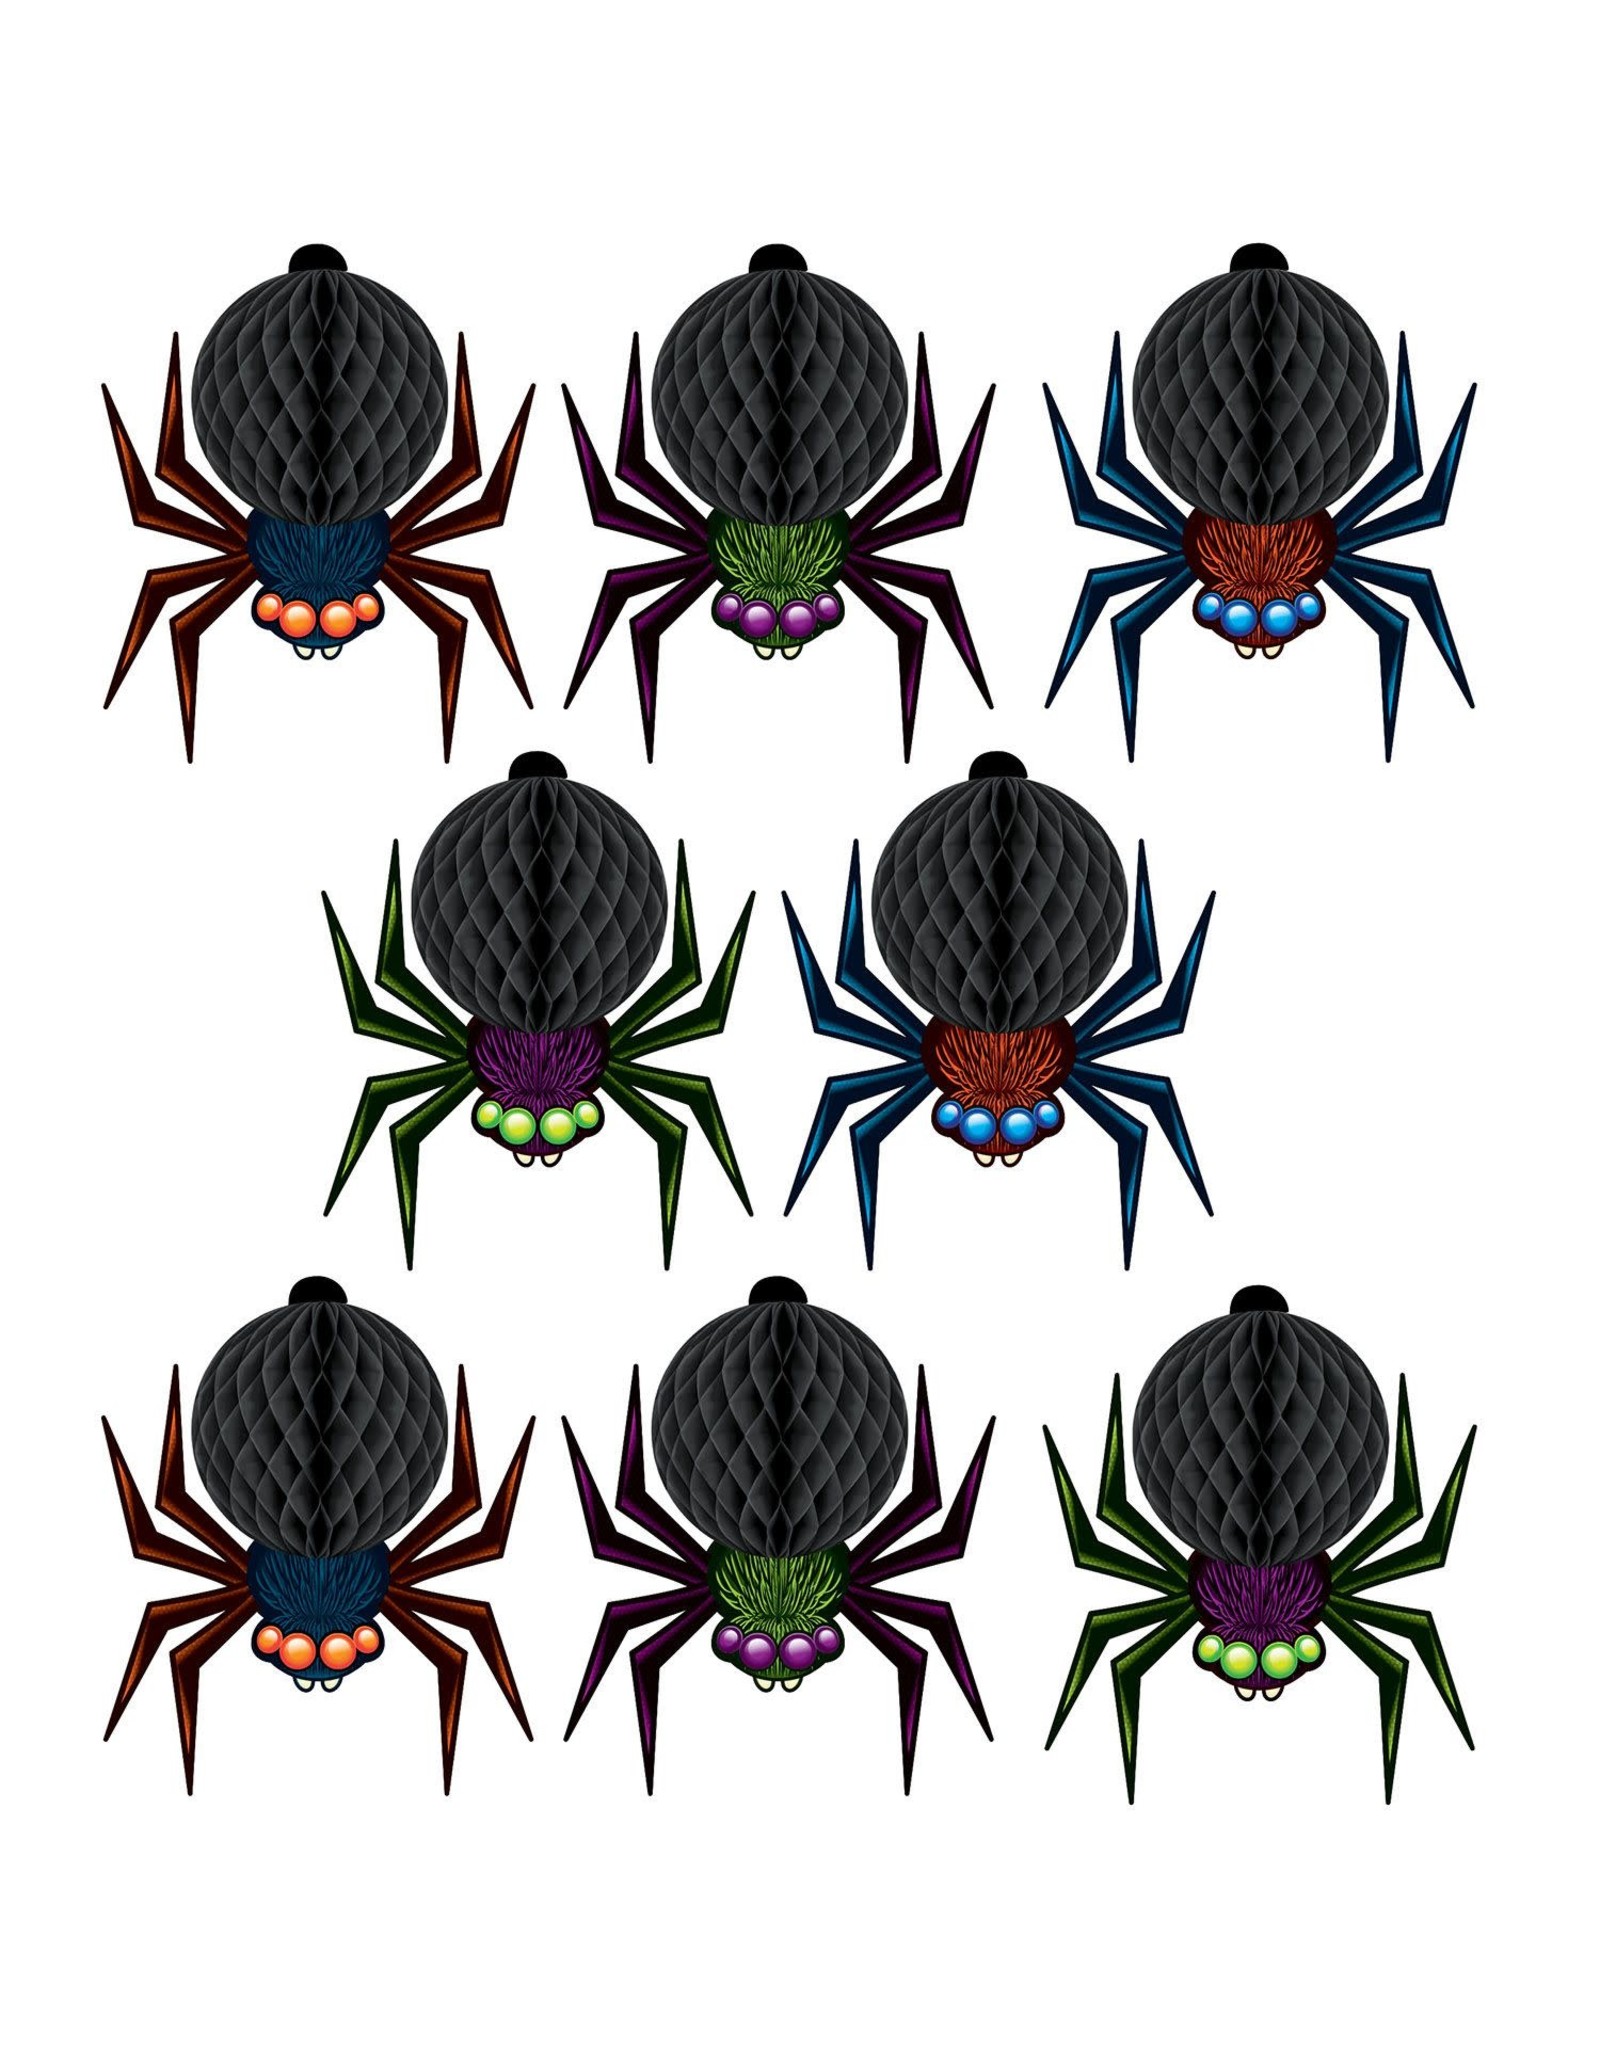 Beistle Mini Tissue Spiders 5.75 Inch Assorted 8pc Set